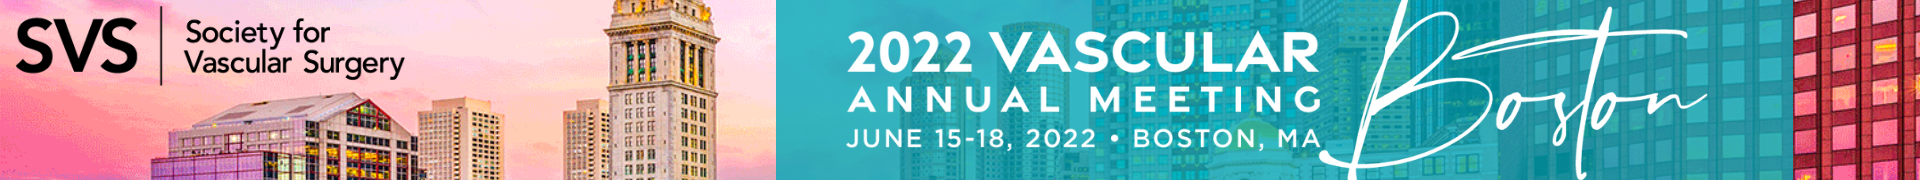 2022 Vascular Annual Meeting Event Banner